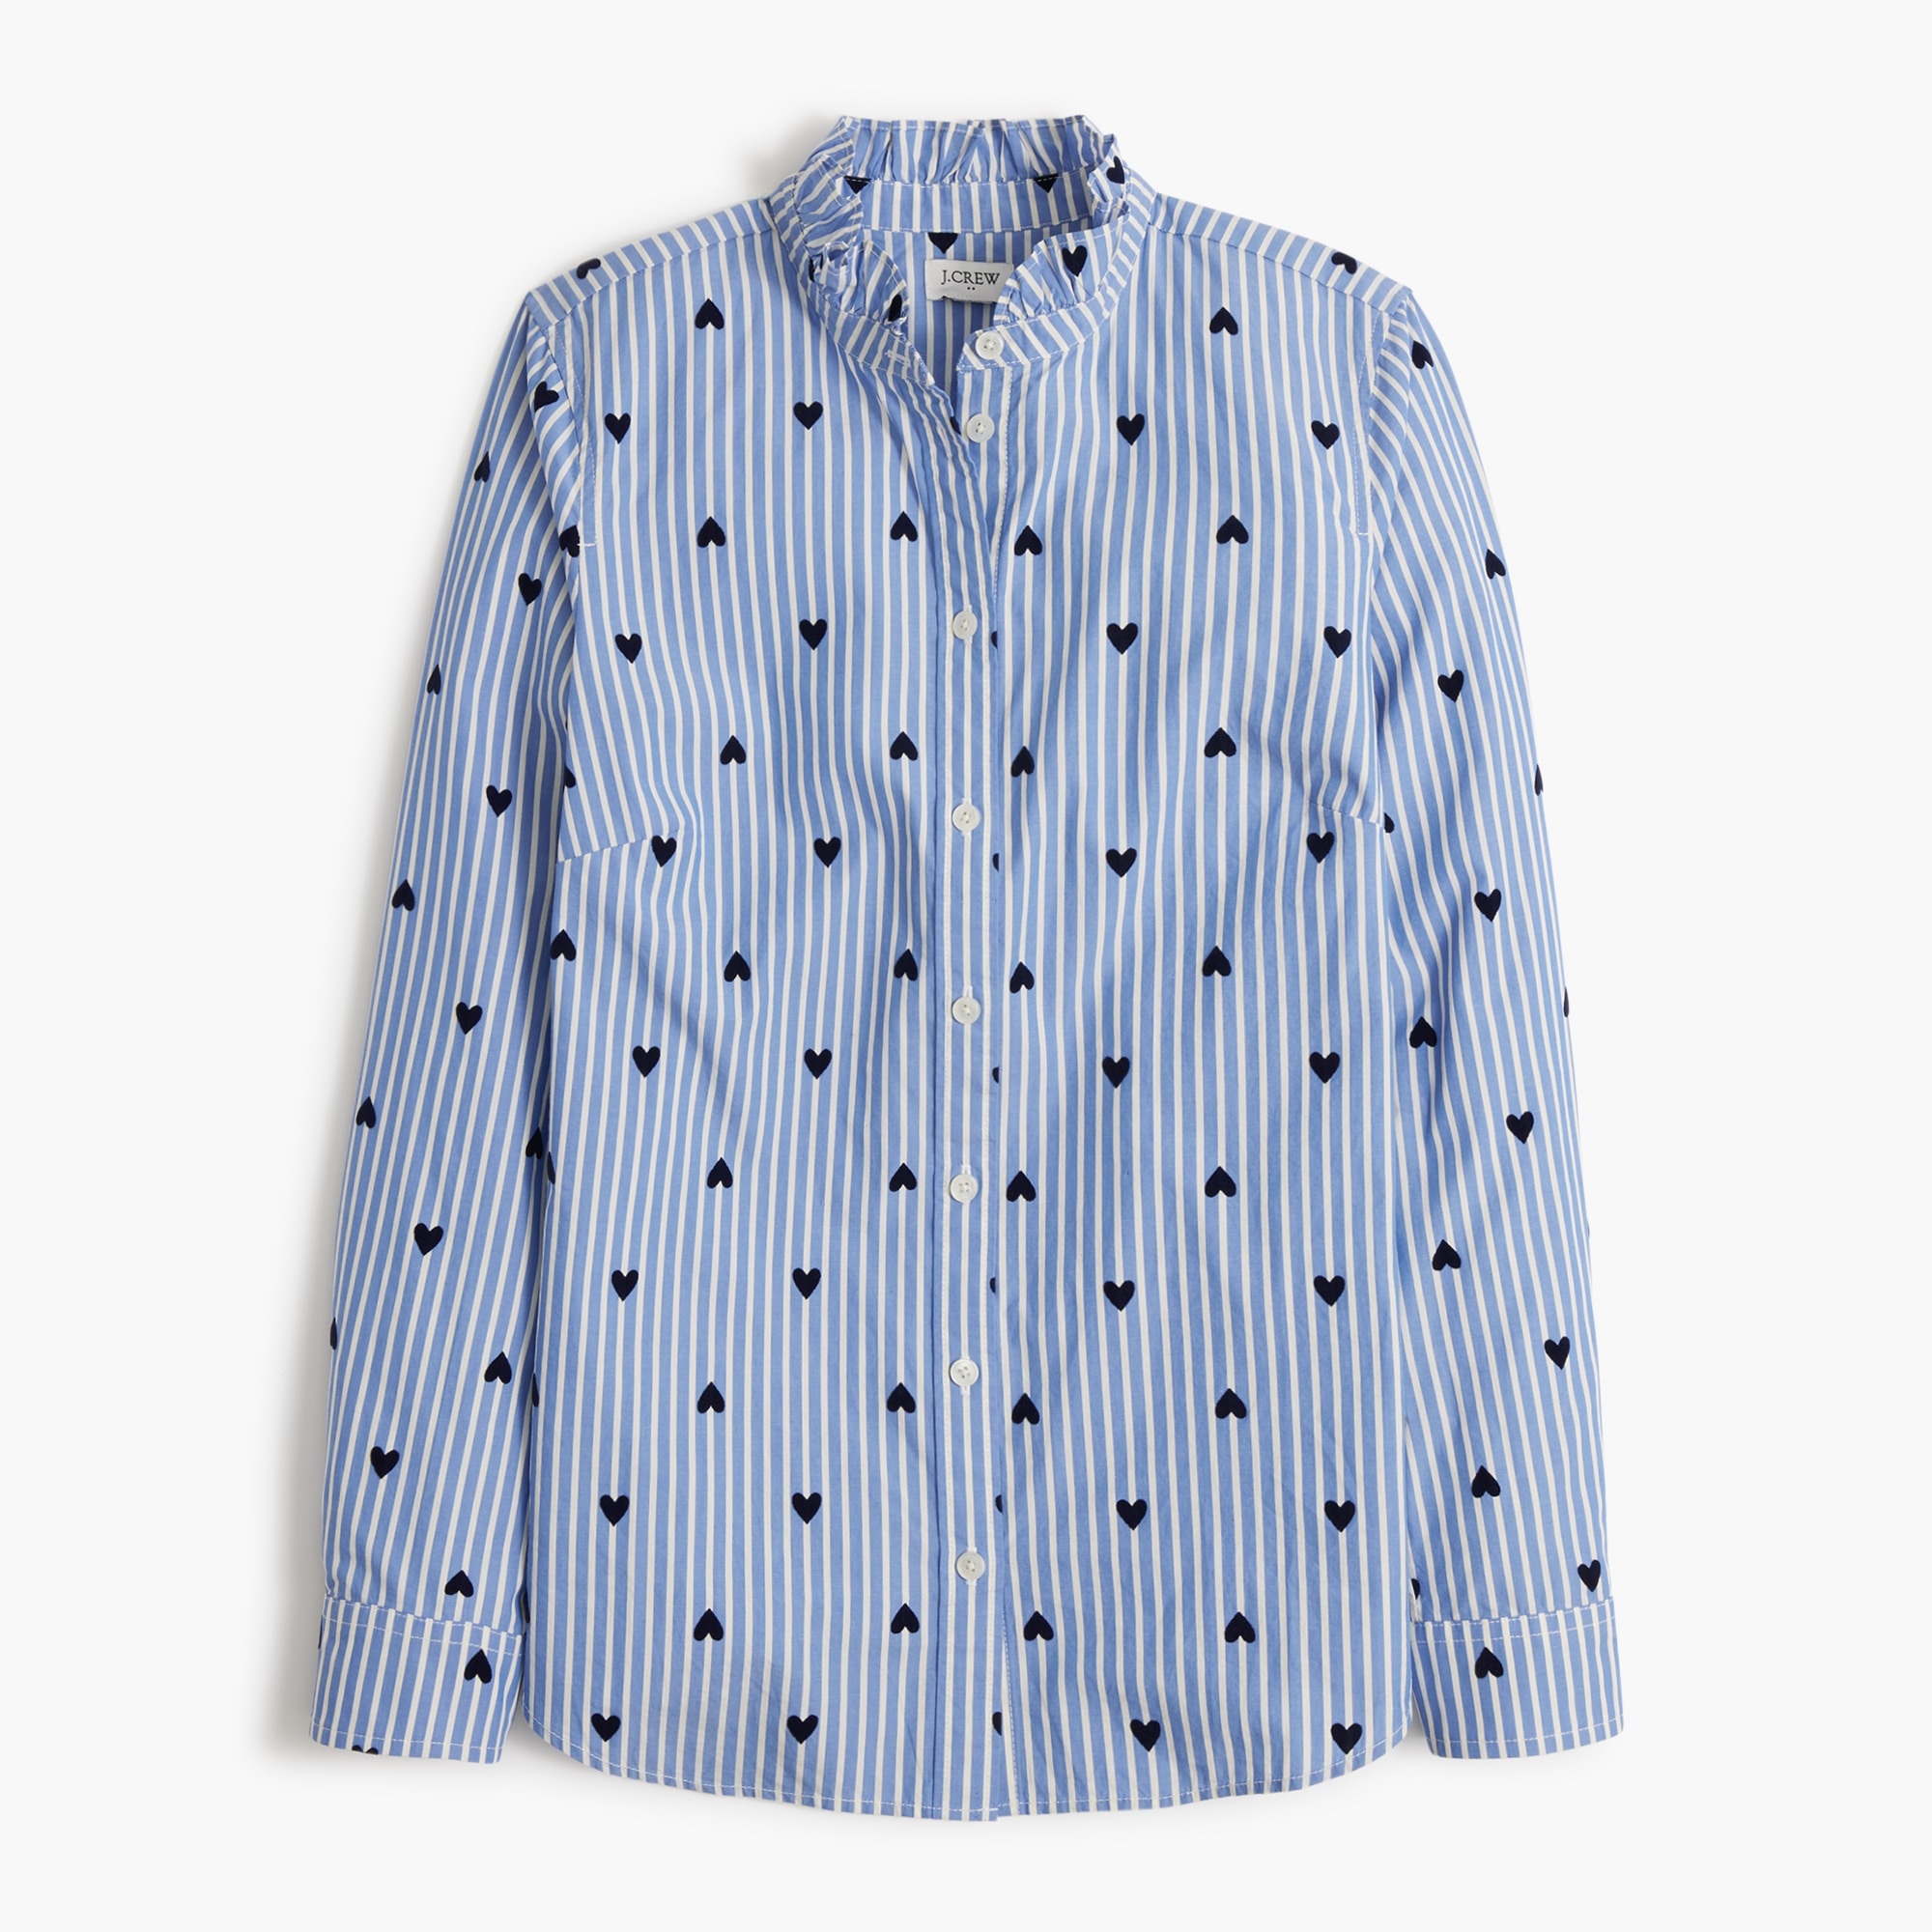  Hearts ruffleneck button-up shirt